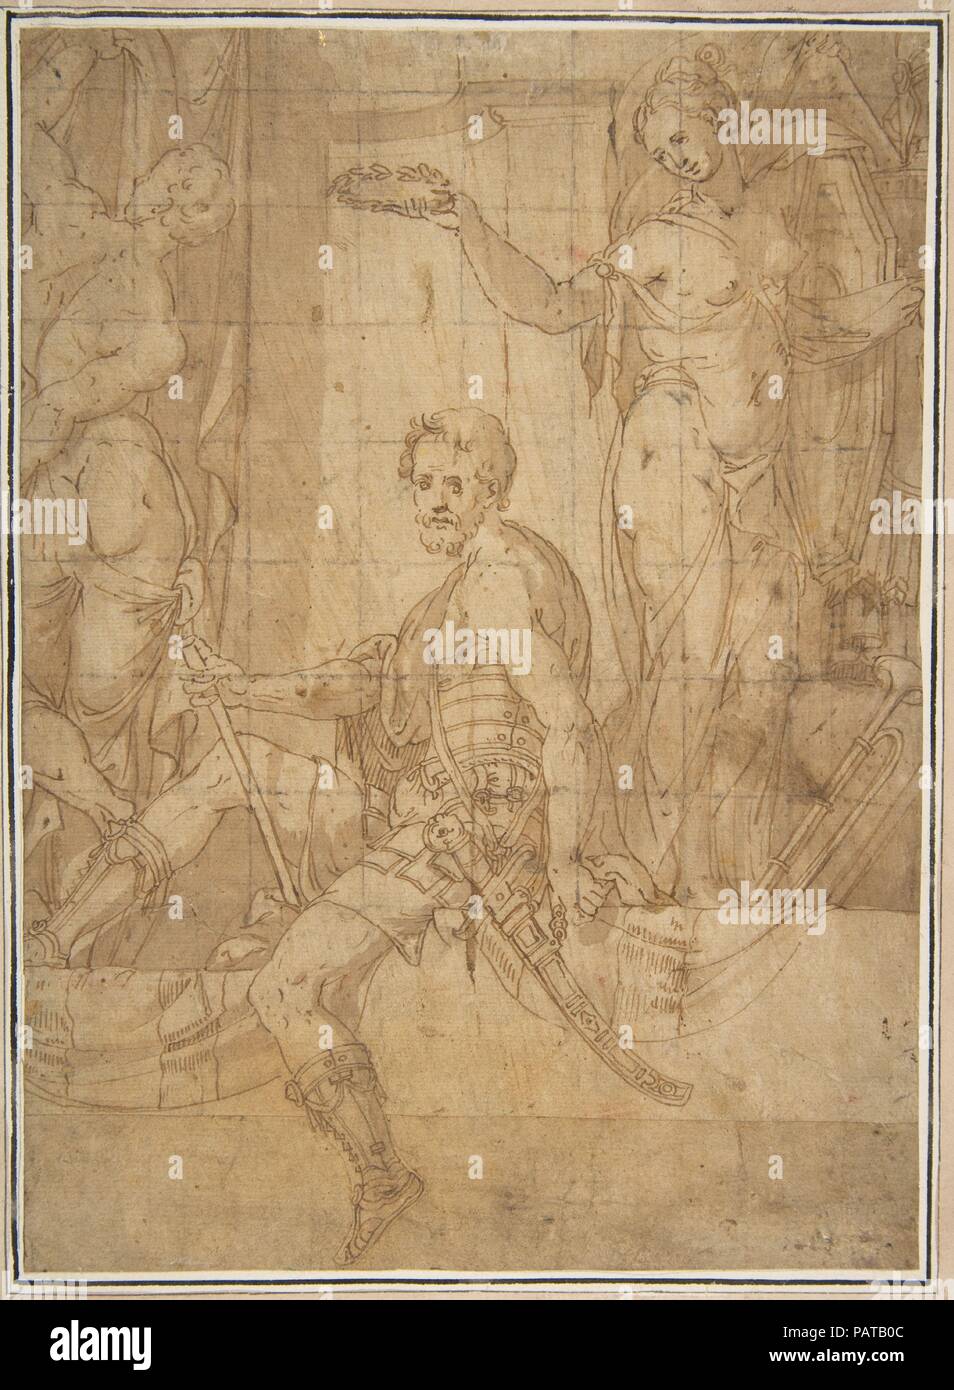 Seated Warrior Between Two Figures. Artist: Giambattista Zelotti (Italian, Verona 1526-1578 Mantua) (?). Dimensions: 9 9/16 x 6 7/8 in. (24.3 x 17.5 cm). Date: 1526-78. Museum: Metropolitan Museum of Art, New York, USA. Stock Photo